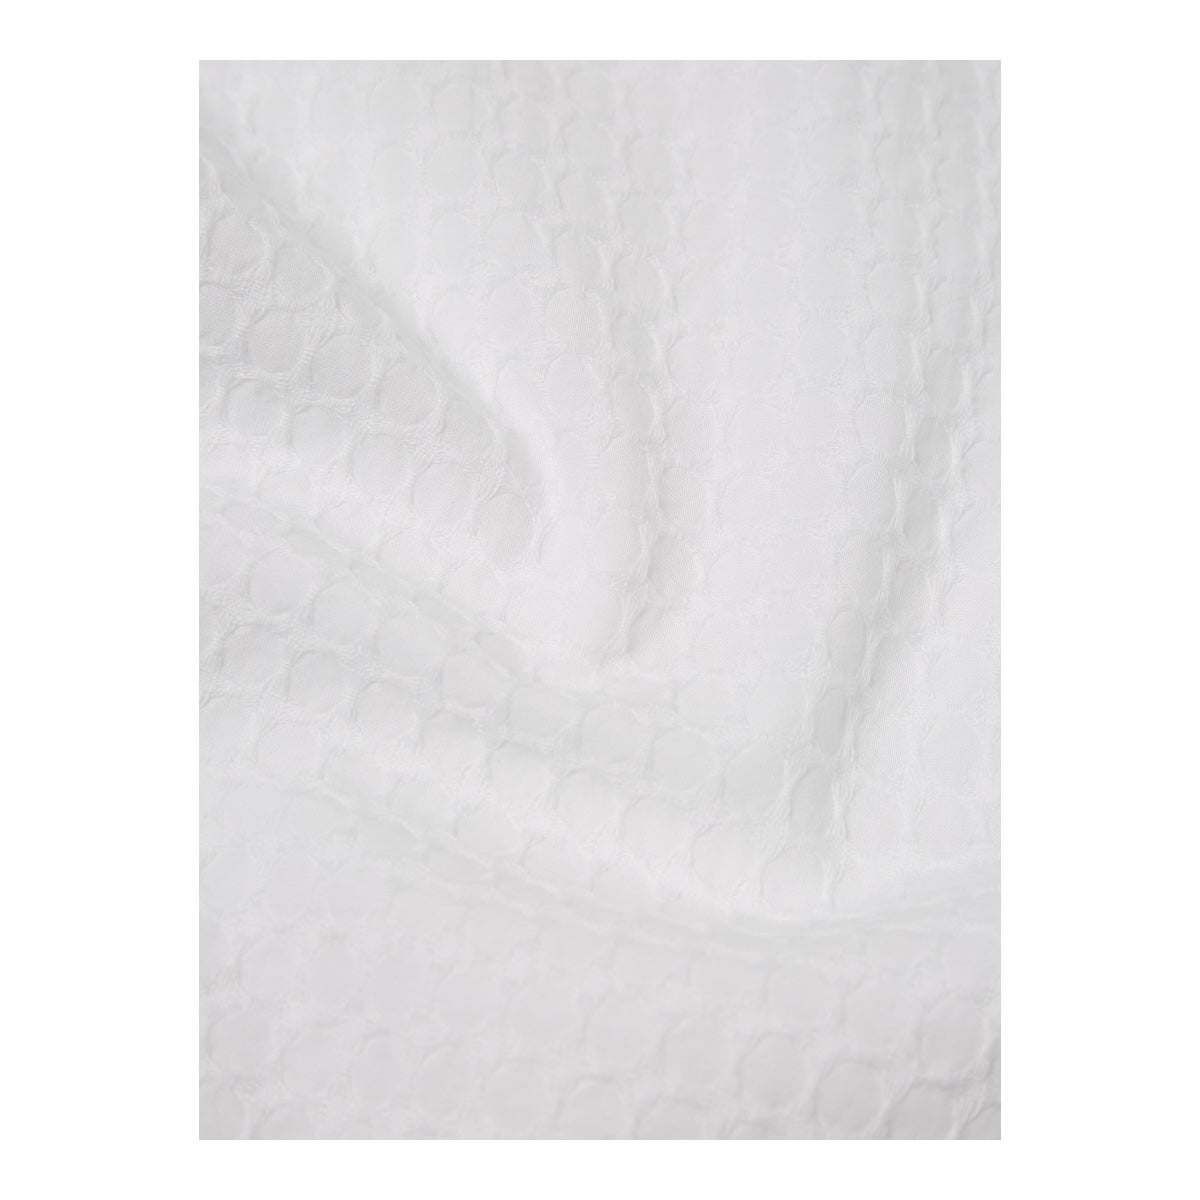 Universal Works Road Shirt 30650 delos cotton white